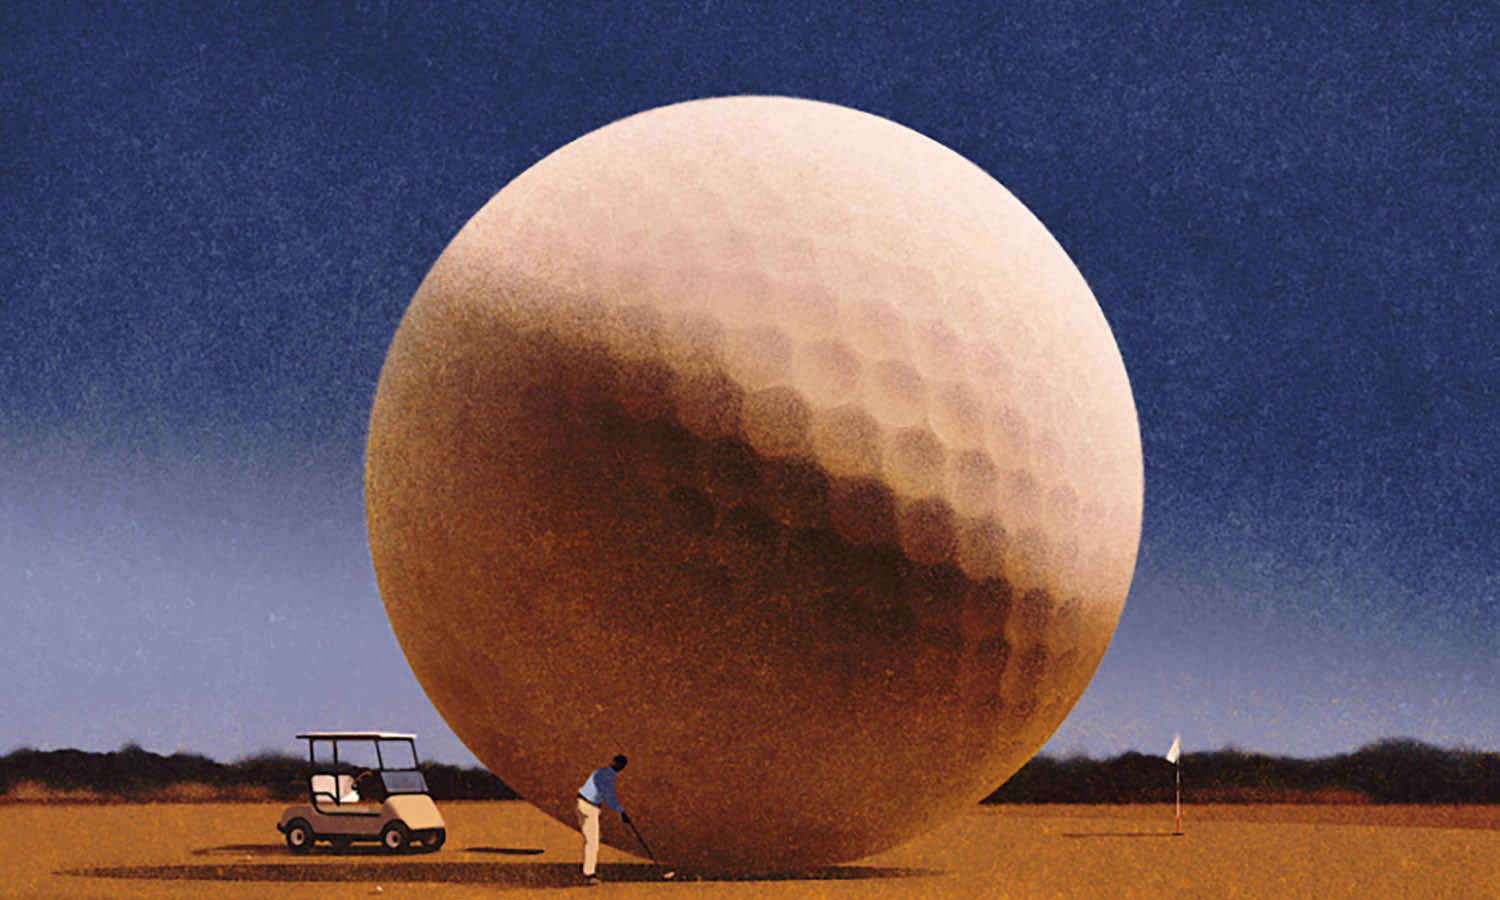 30 Best Golf Illustration Ideas You Should Check